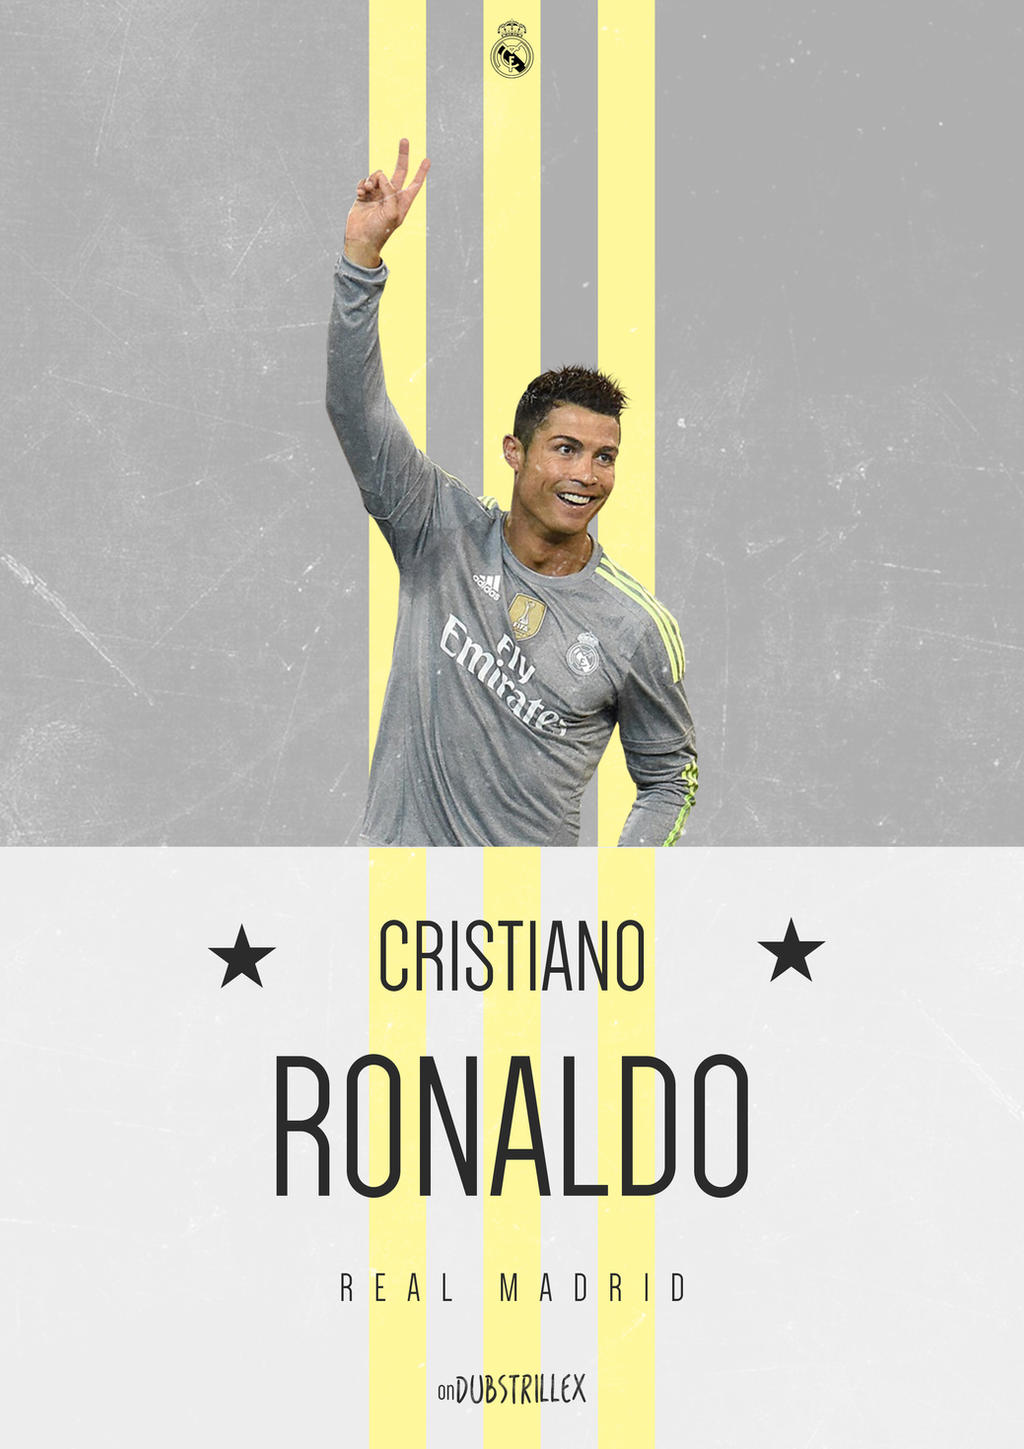 Cristiano Ronaldo poster, design, illustarted art poster, Ronaldo ,Real  madrid